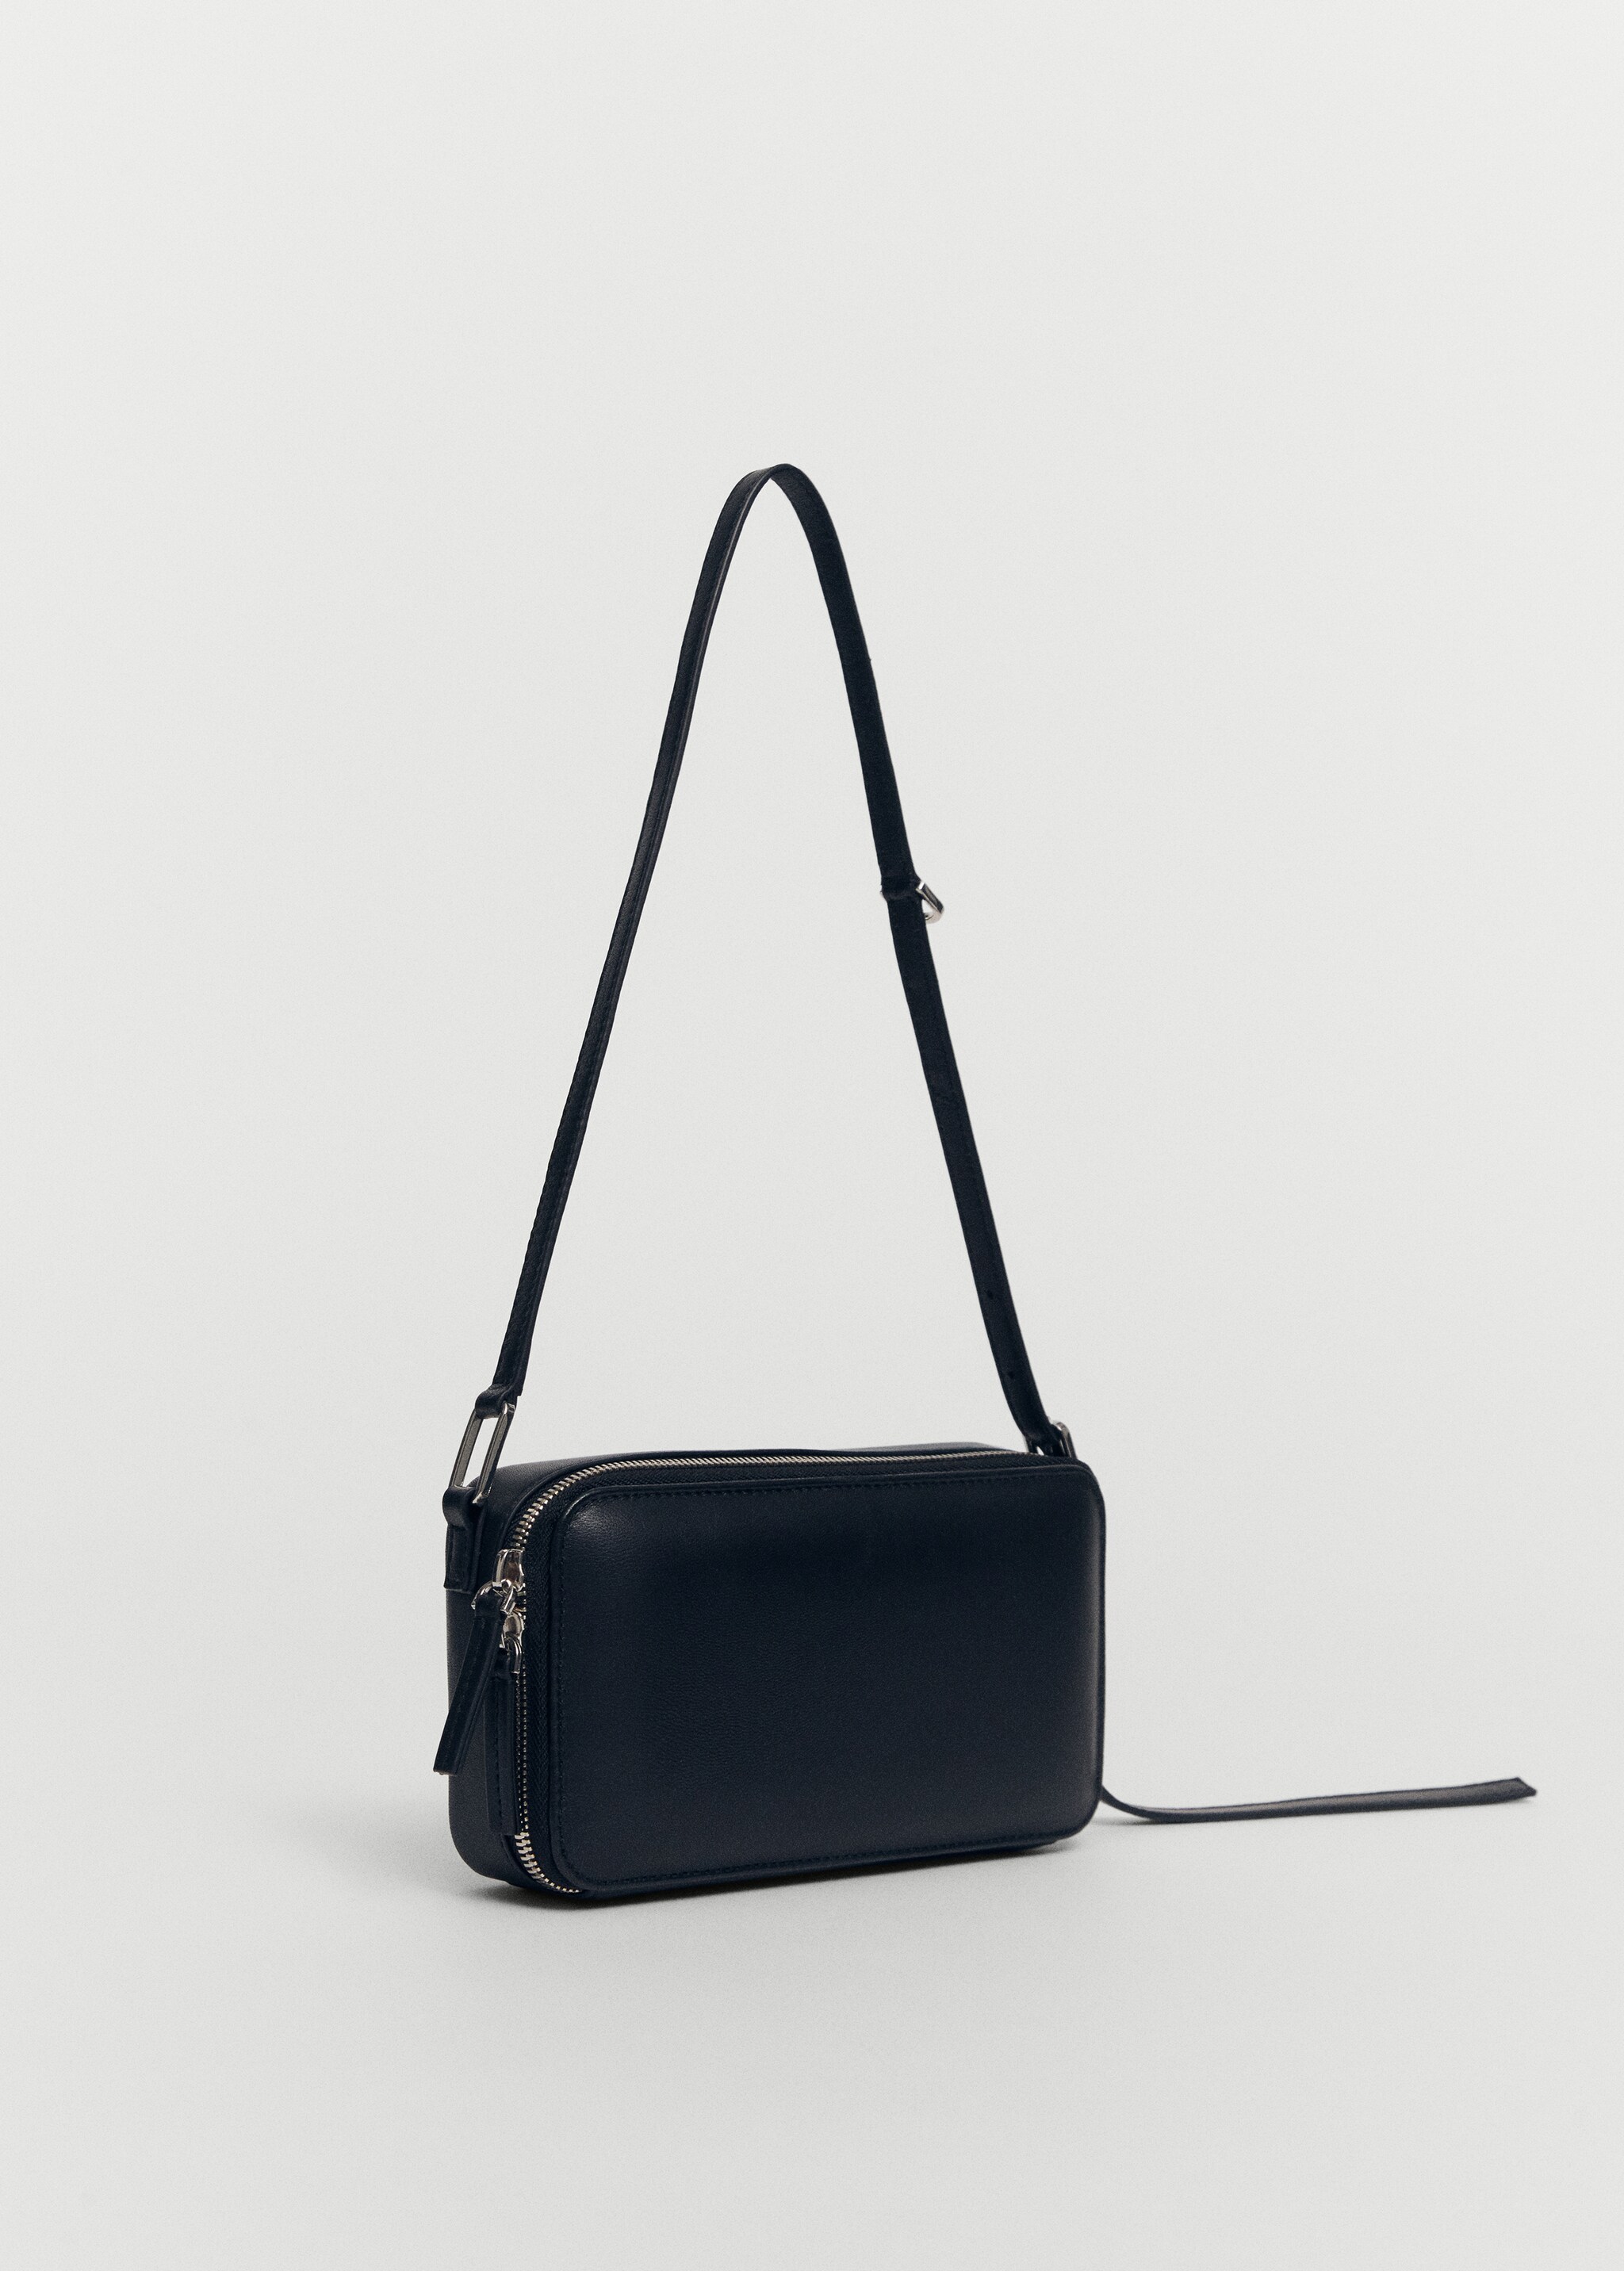 Rectangular leather handbag - Medium plane